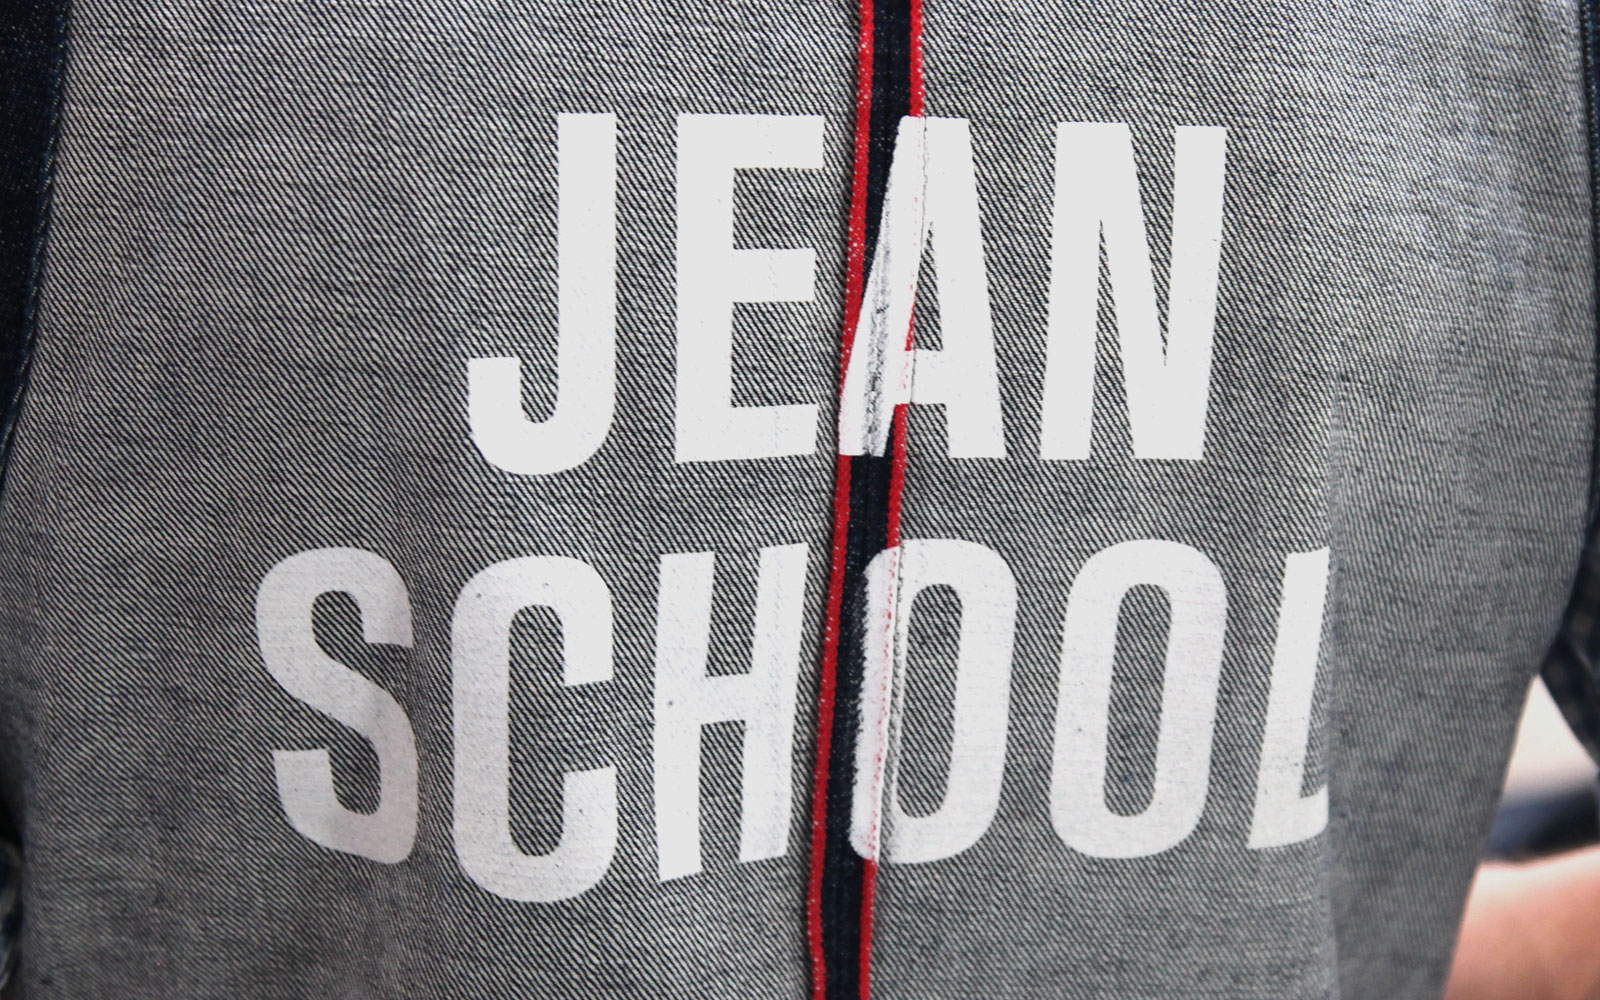 Jean School, Amsterdam - RECAP